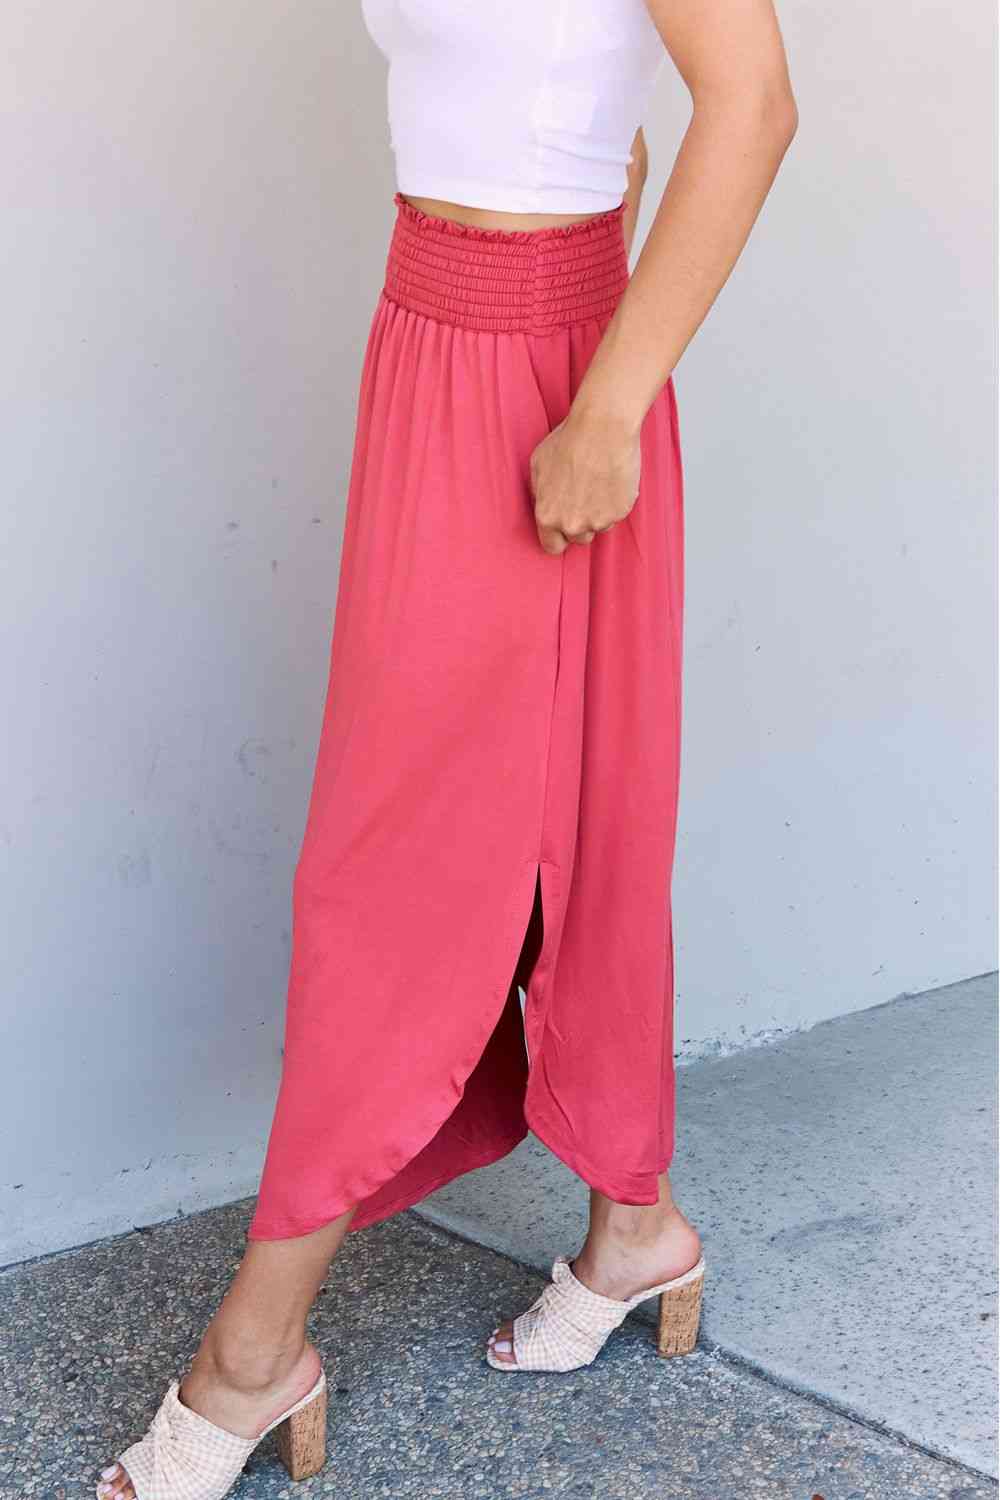 Doublju Comfort Princess Full Size High Waist Scoop Hem Maxi Skirt in Hot Pink - Just Enuff Sexy